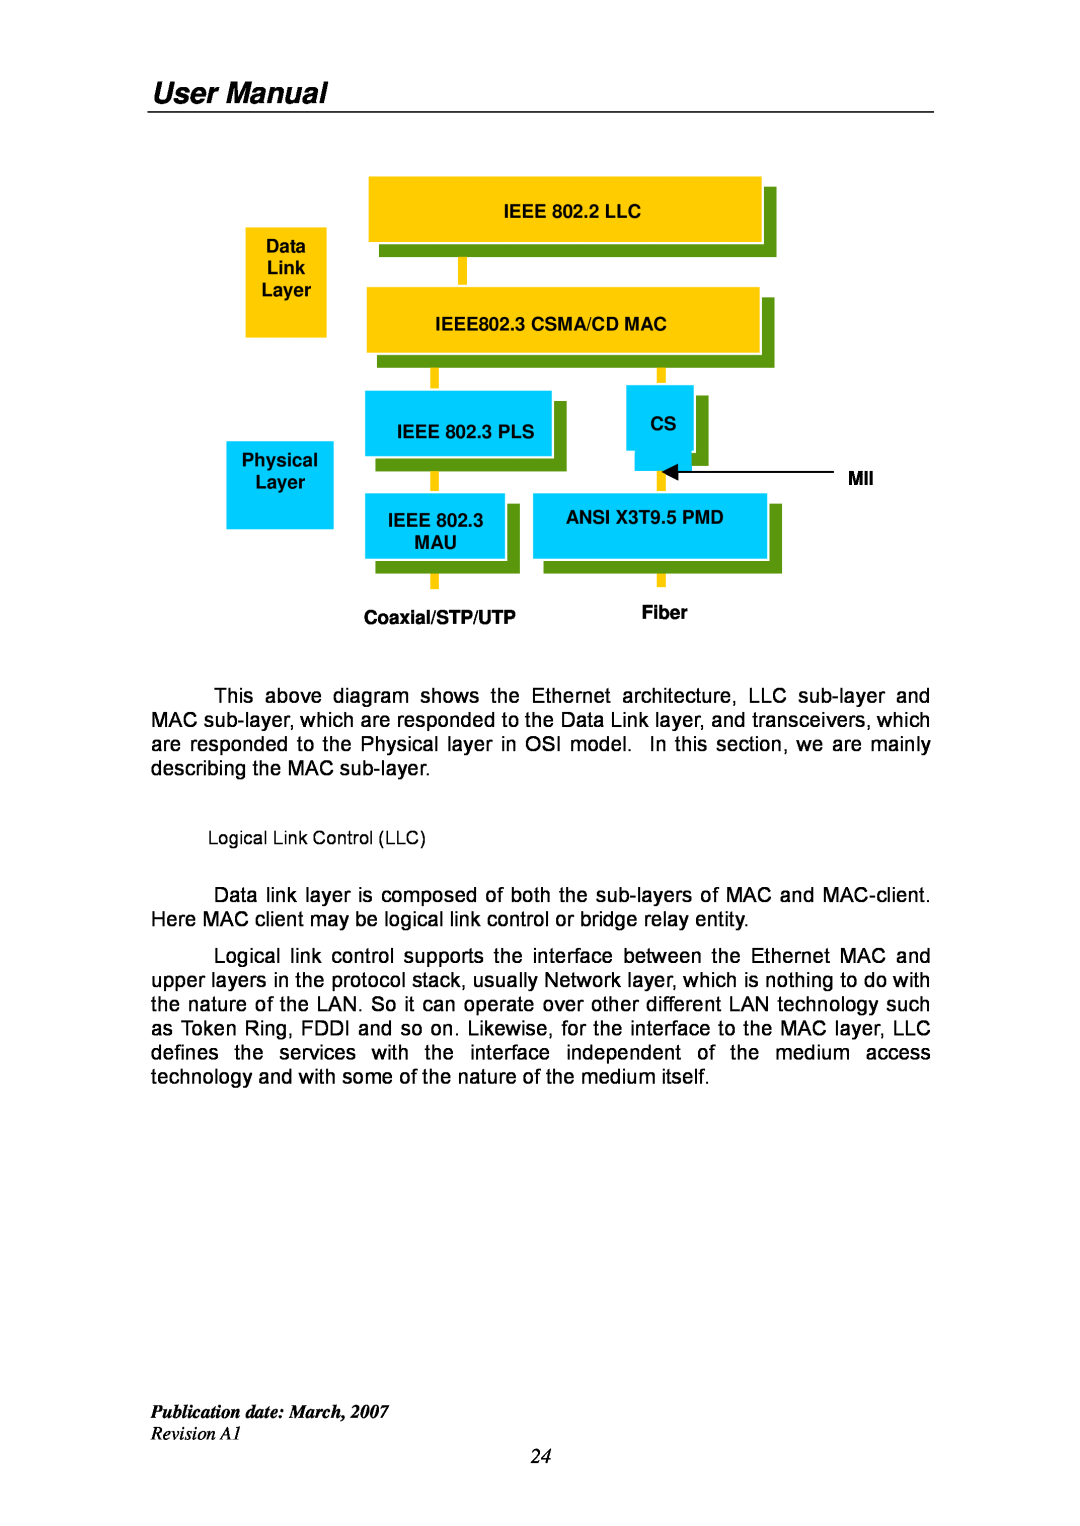 Ruby Tech GS-1224L User Manual, Data Link Layer, IEEE 802.2 LLC IEEE802.3 CSMA/CD MAC, Physical Layer, MII ANSI X3T9.5 PMD 